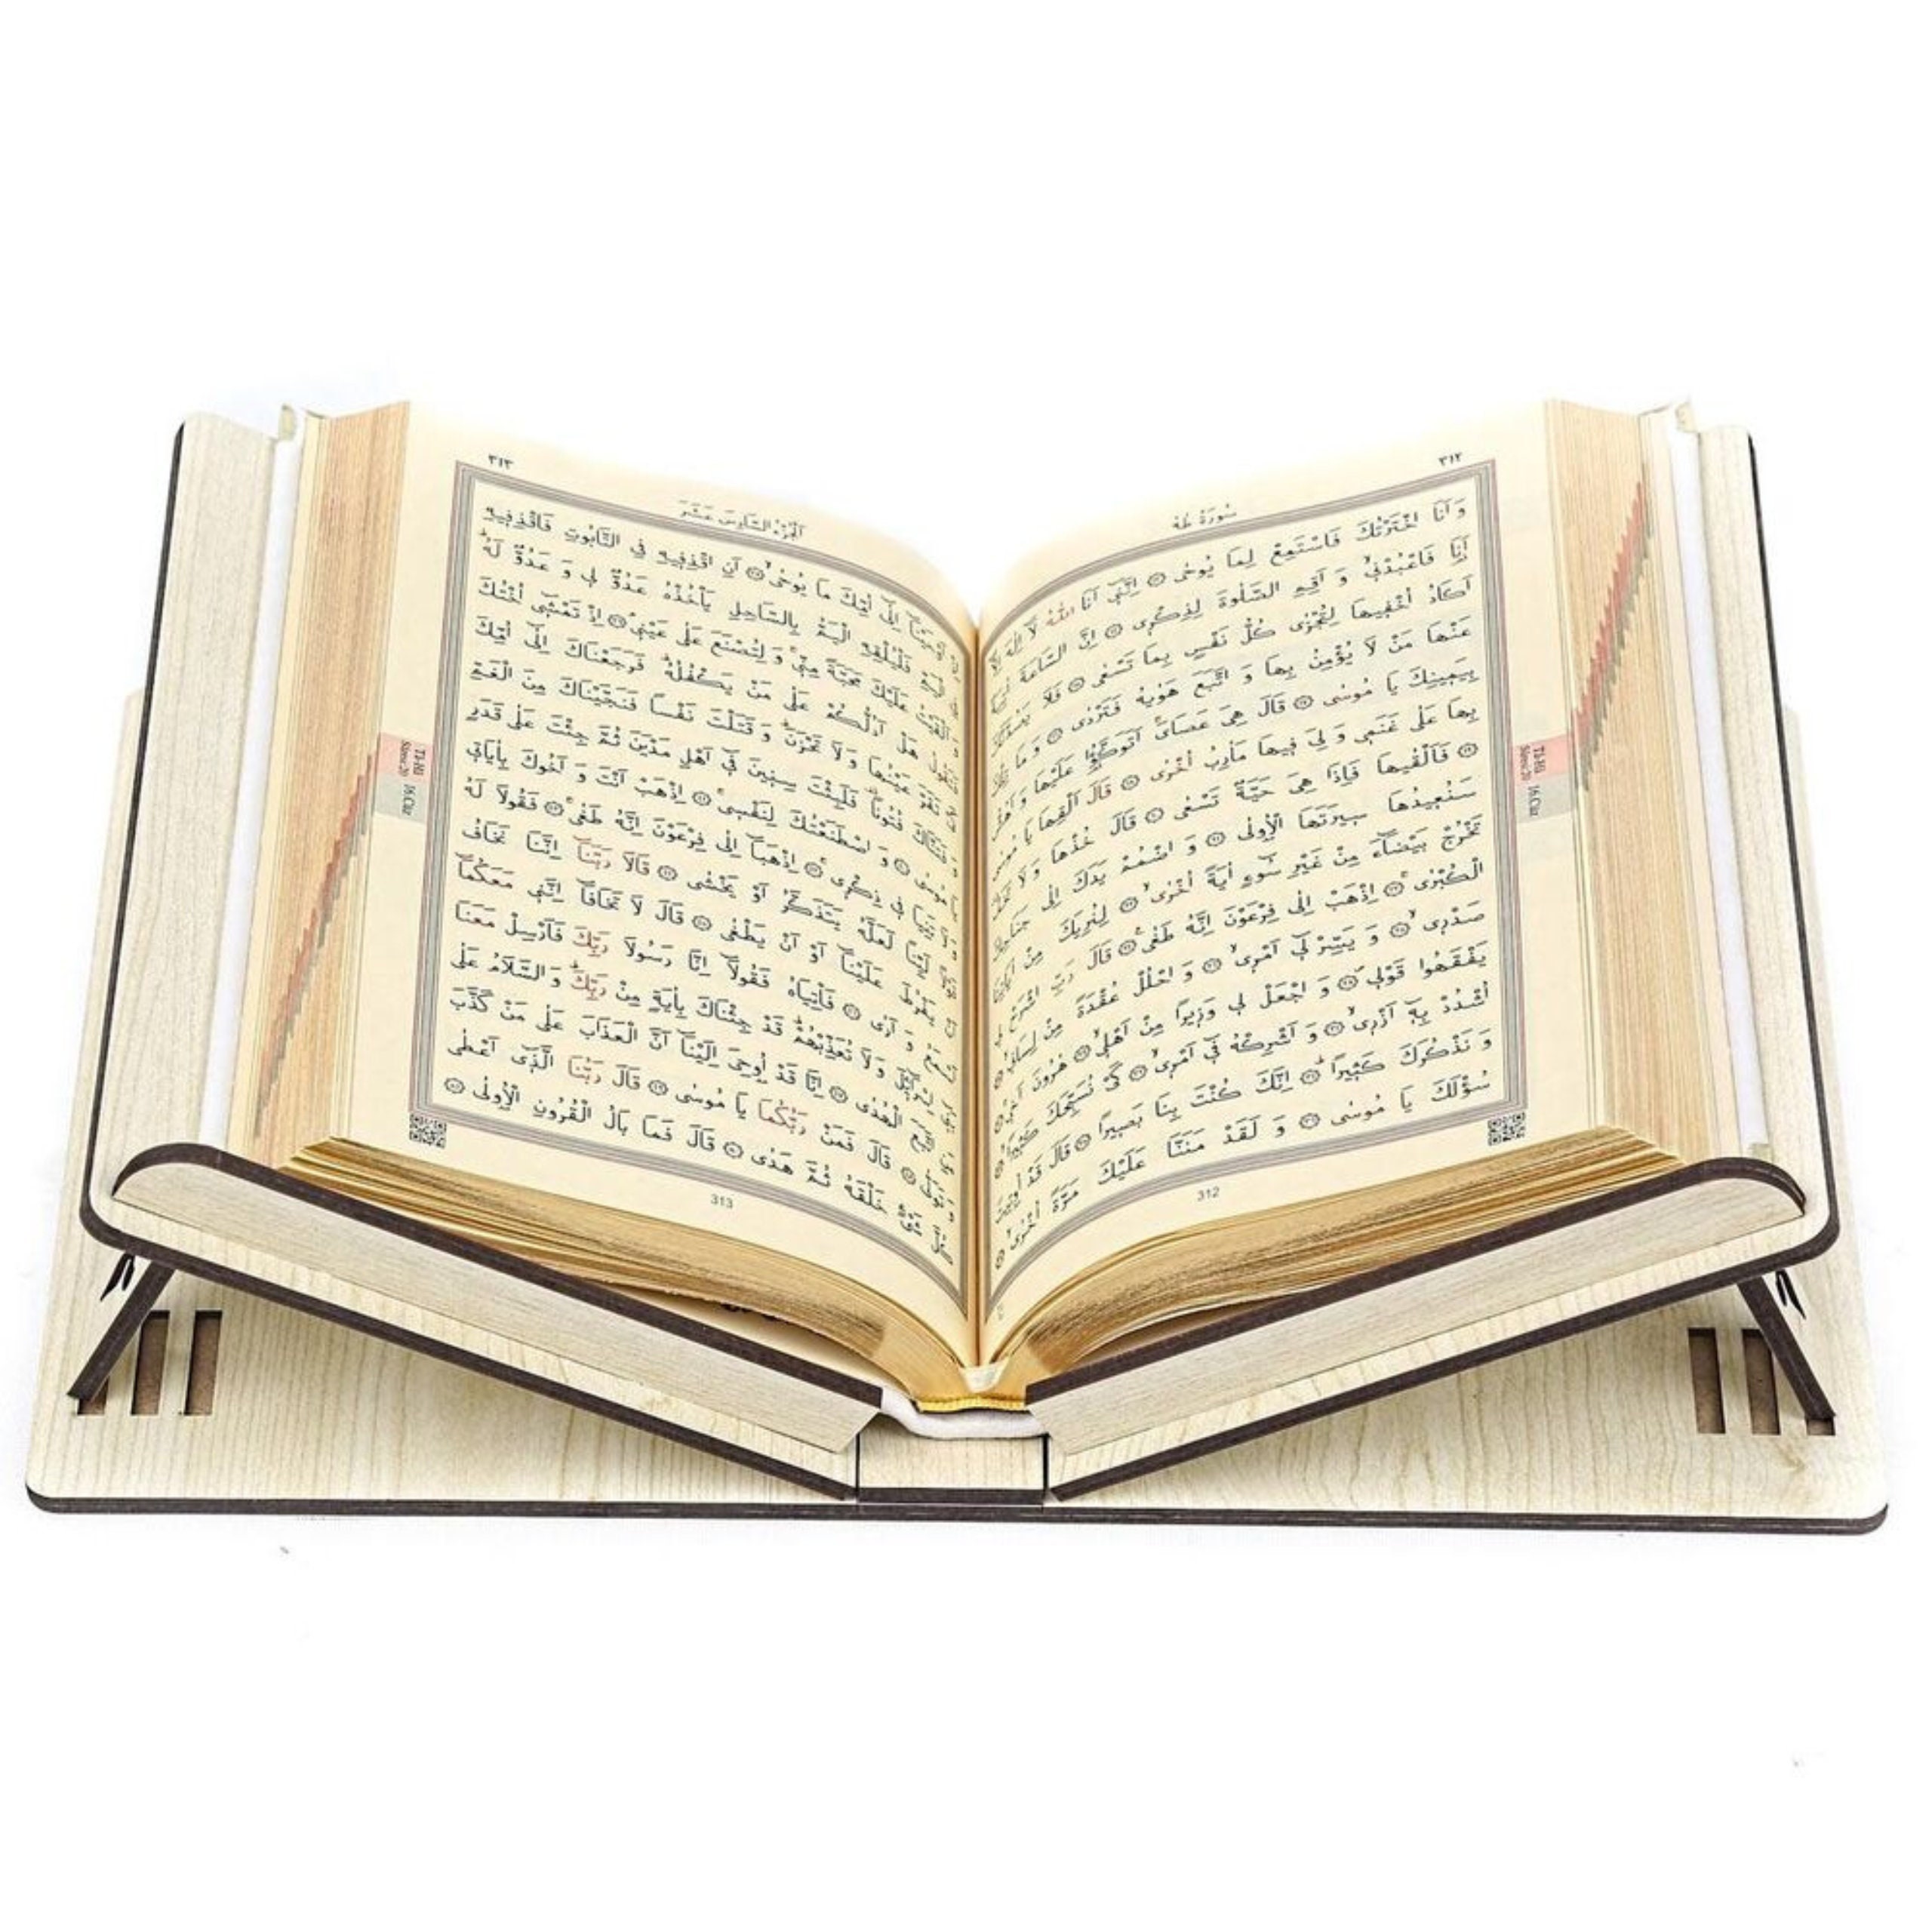 Soporte ajustable para libros de madera tallada | Corán, Biblia, atril de  Torá | Diccionario, Soporte para libro de cocina